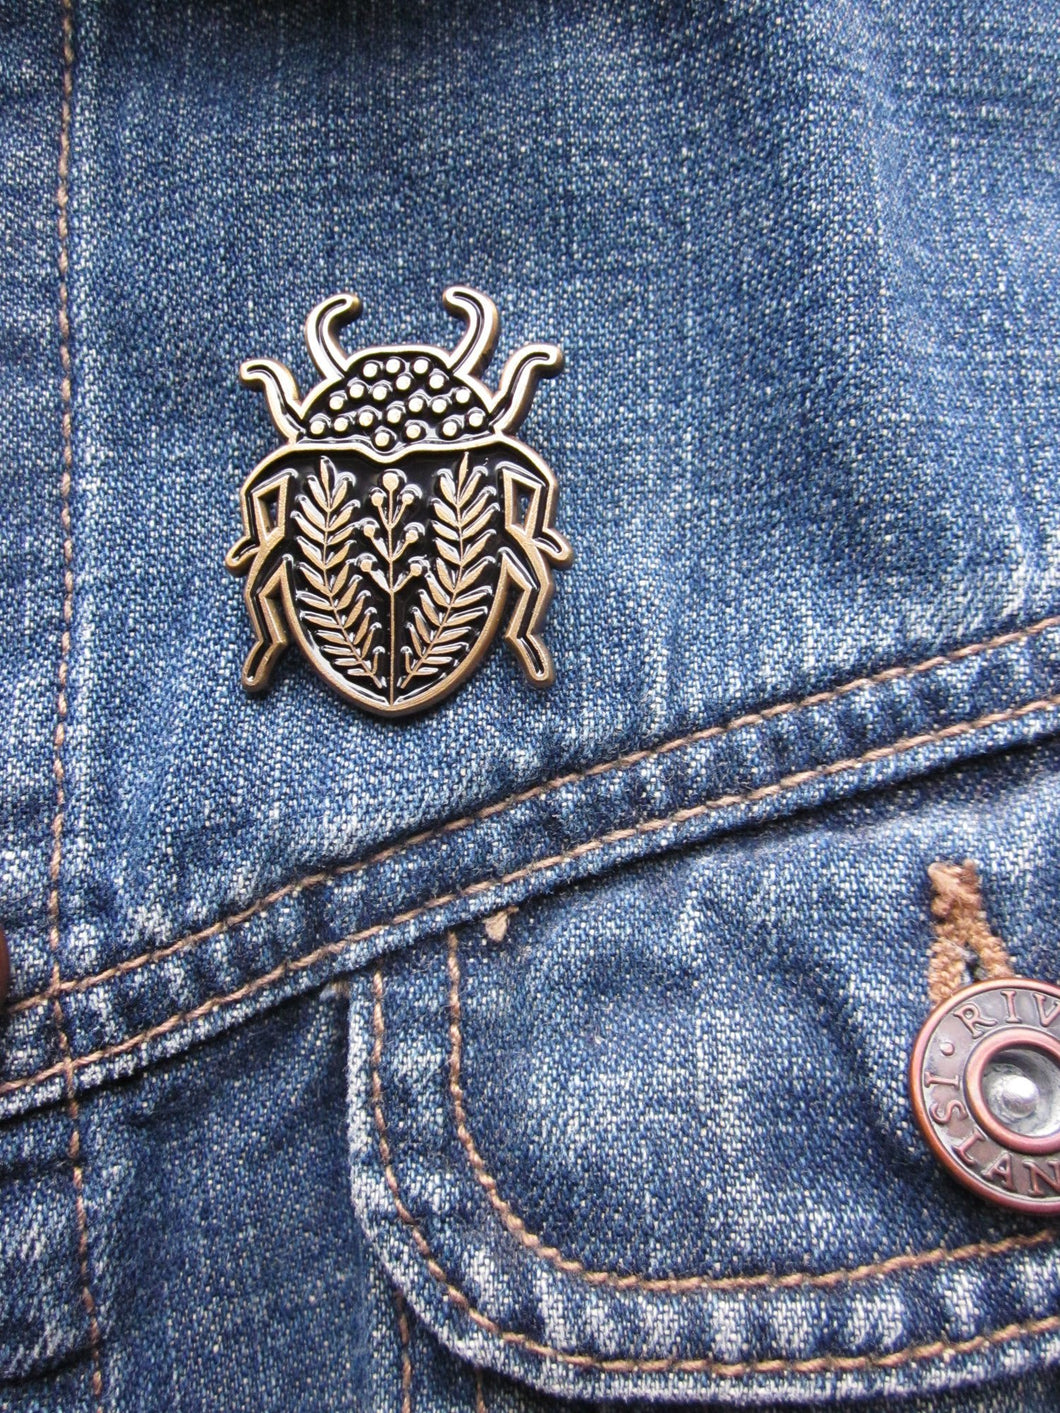 Enamel pin brooch, beetle design, black and gold metal